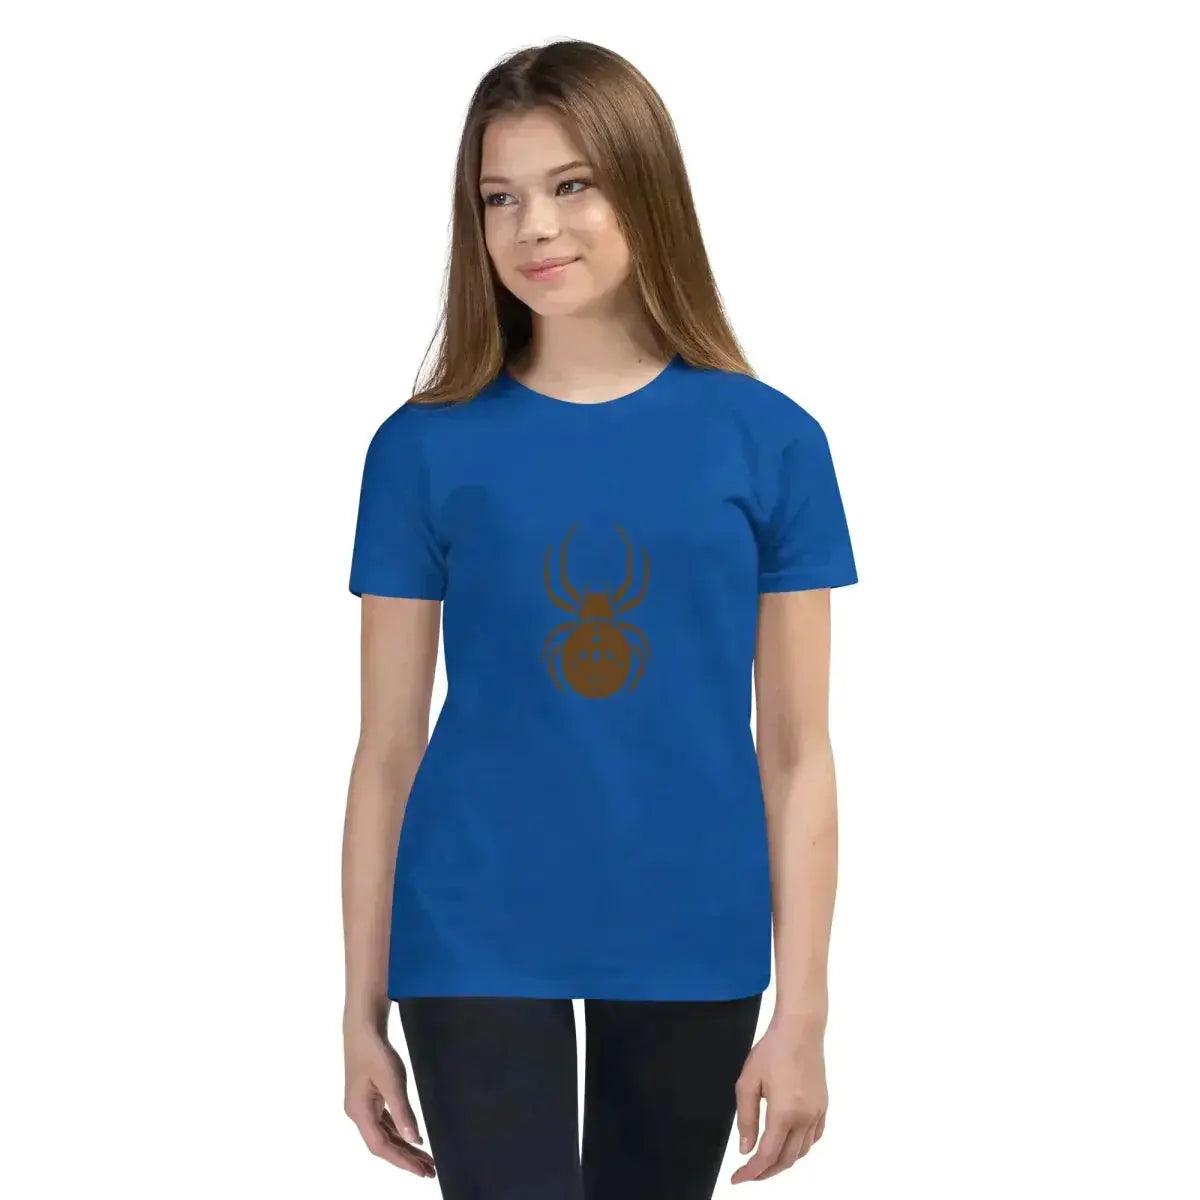 Mädchen T-Shirt S-XL - Preis: € 29.69 - BUYATHOME24 Germany